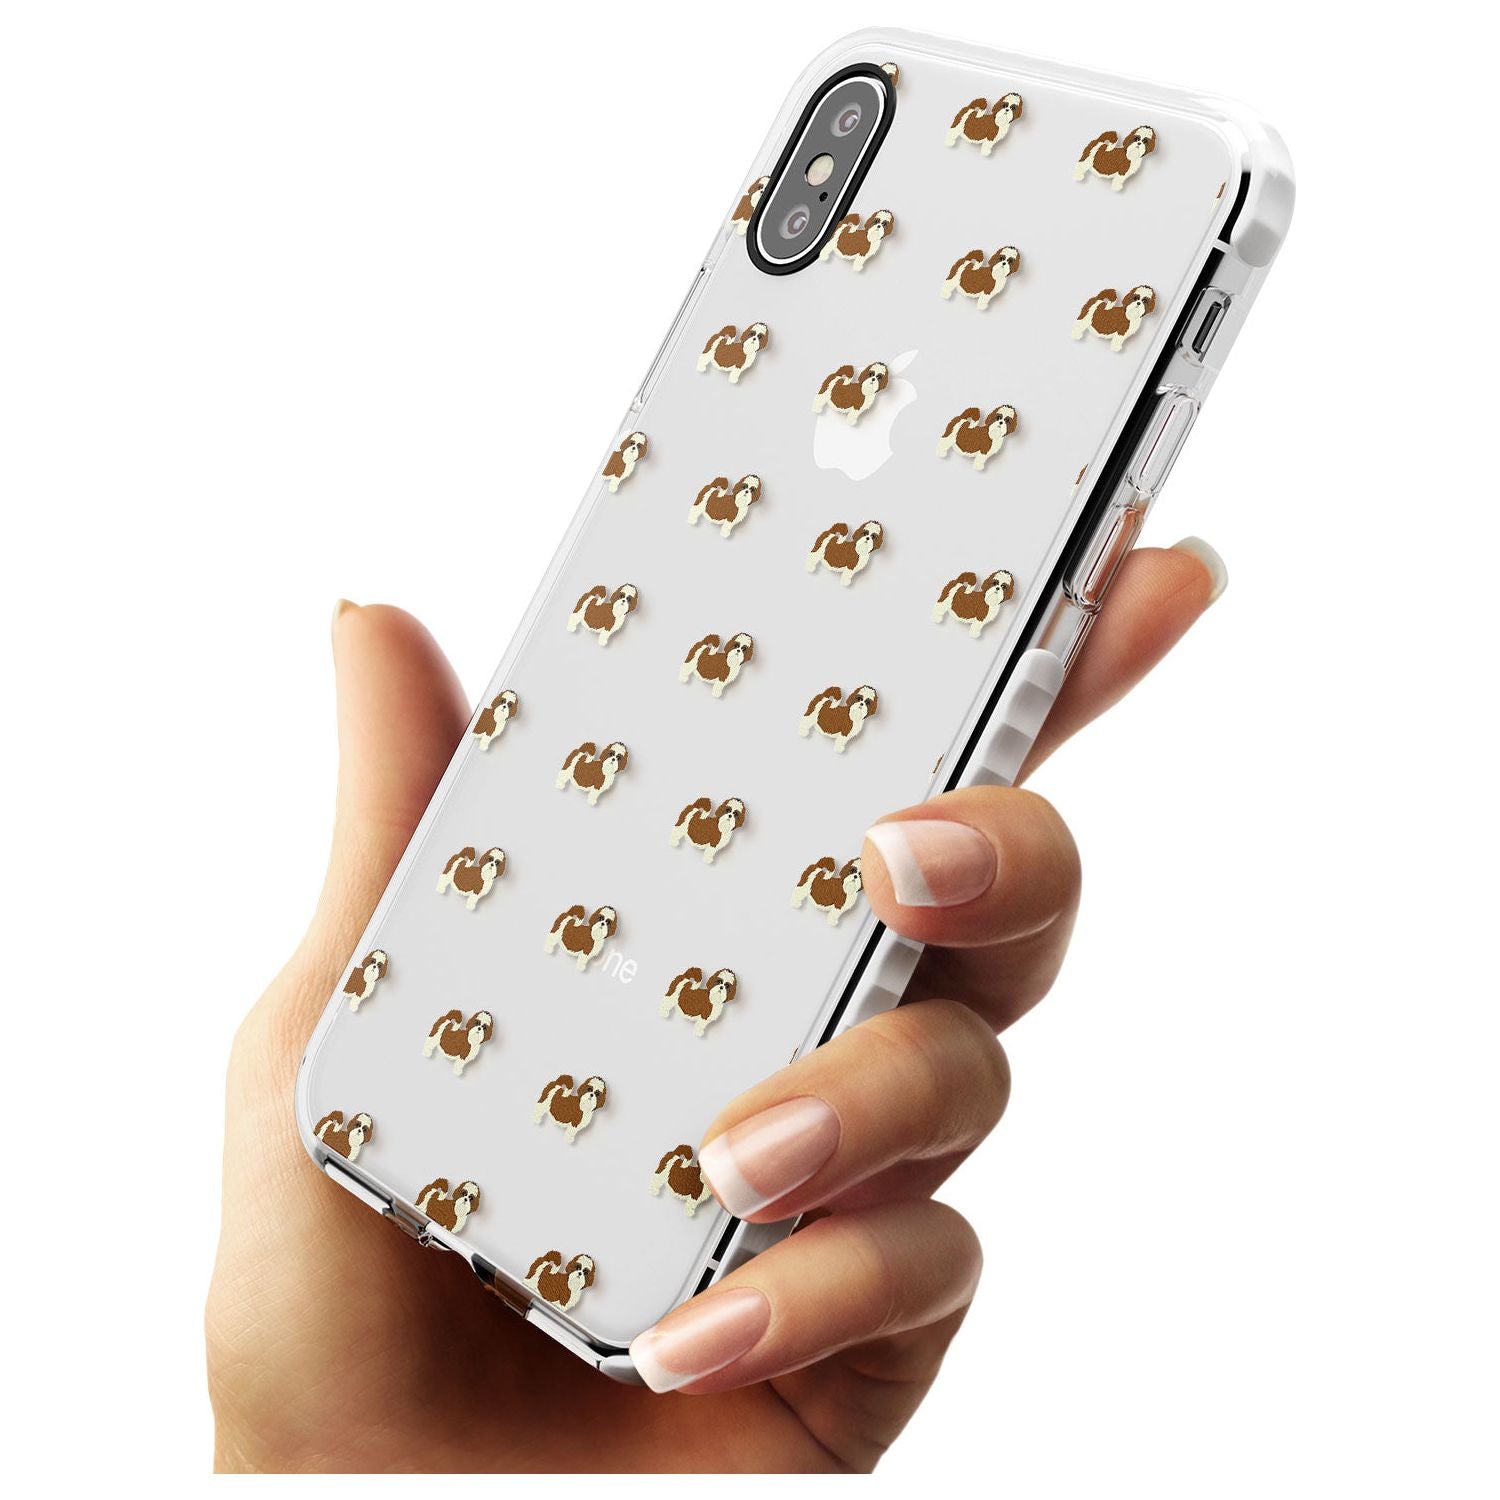 Shih Tzu Dog Pattern Clear Impact Phone Case for iPhone X XS Max XR